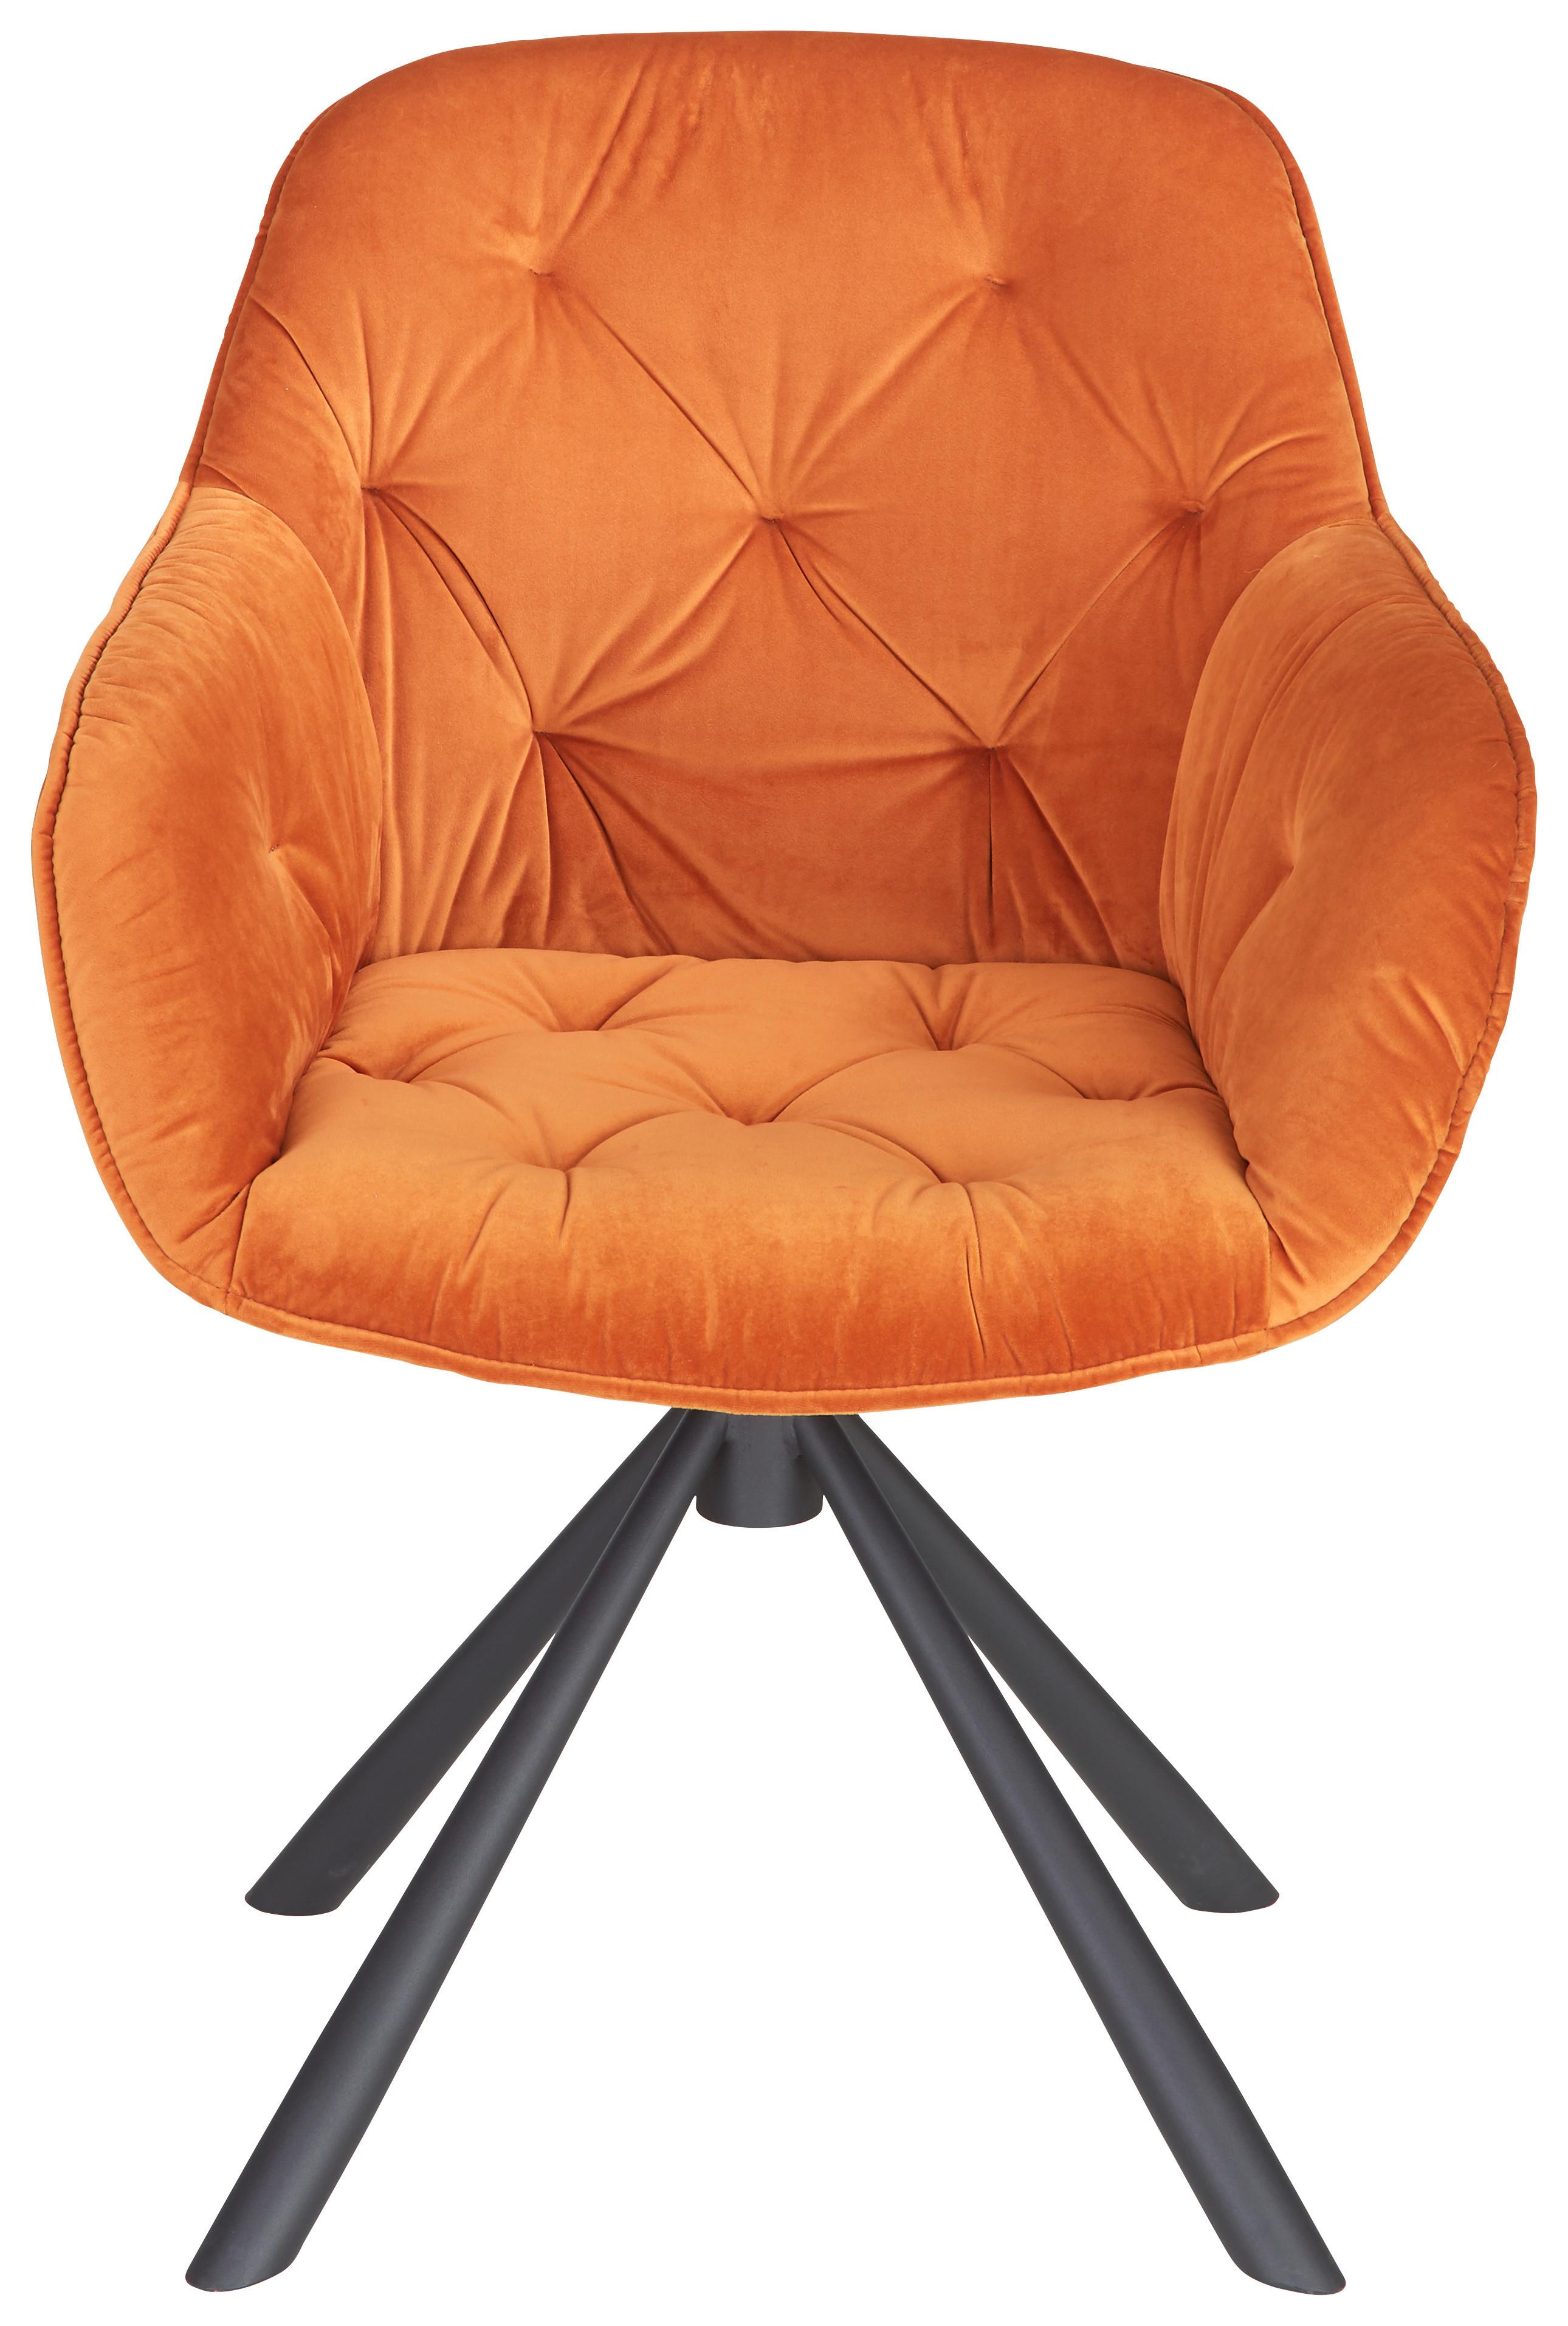 Armlehnstuhl in Orange - Schwarz/Orange, LIFESTYLE, Holz/Textil (63/86/66cm) - Based